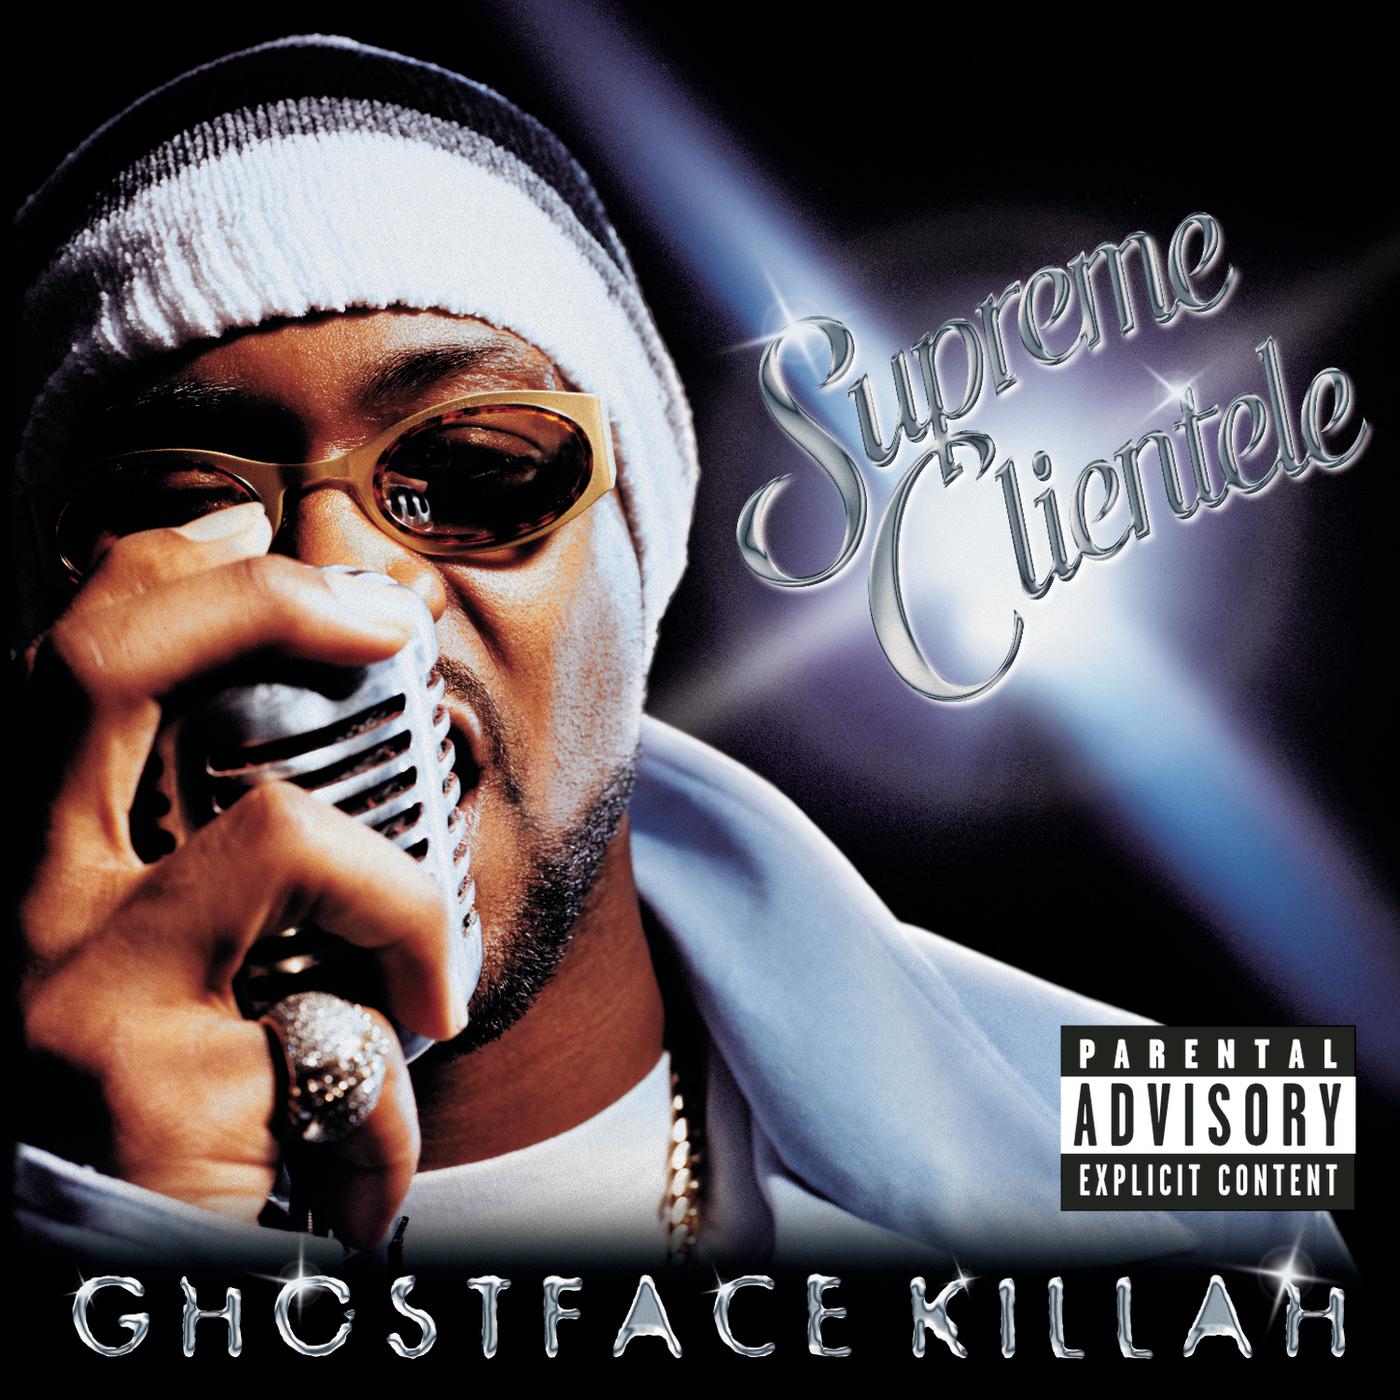 Ghostface Killah - Stroke of Death